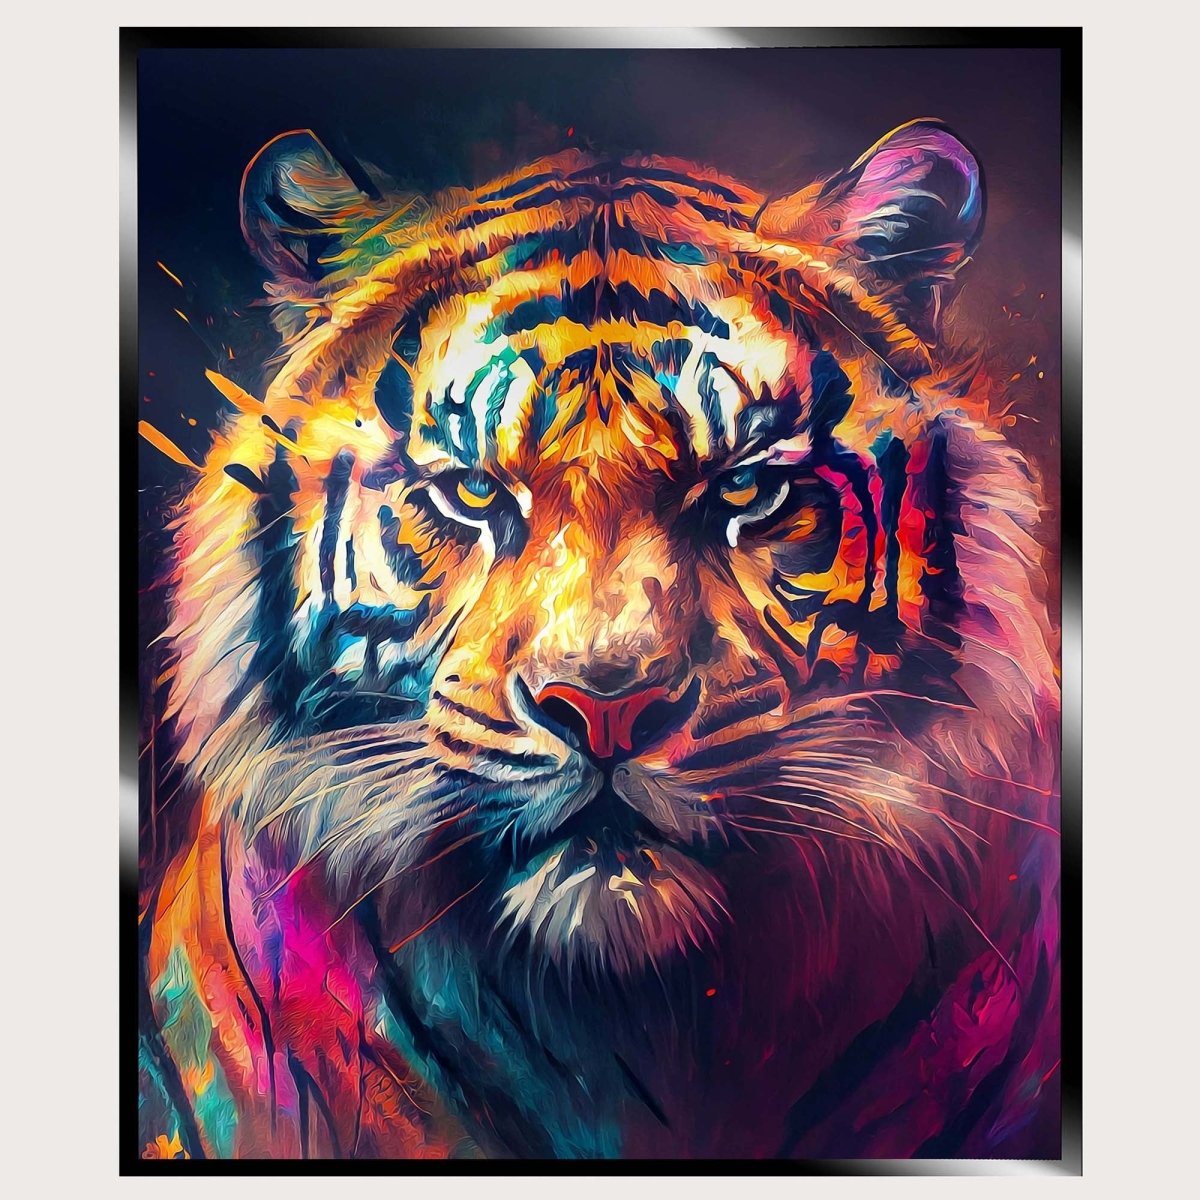 Illuminated Wall Art - Tiger 4 - madaboutneon